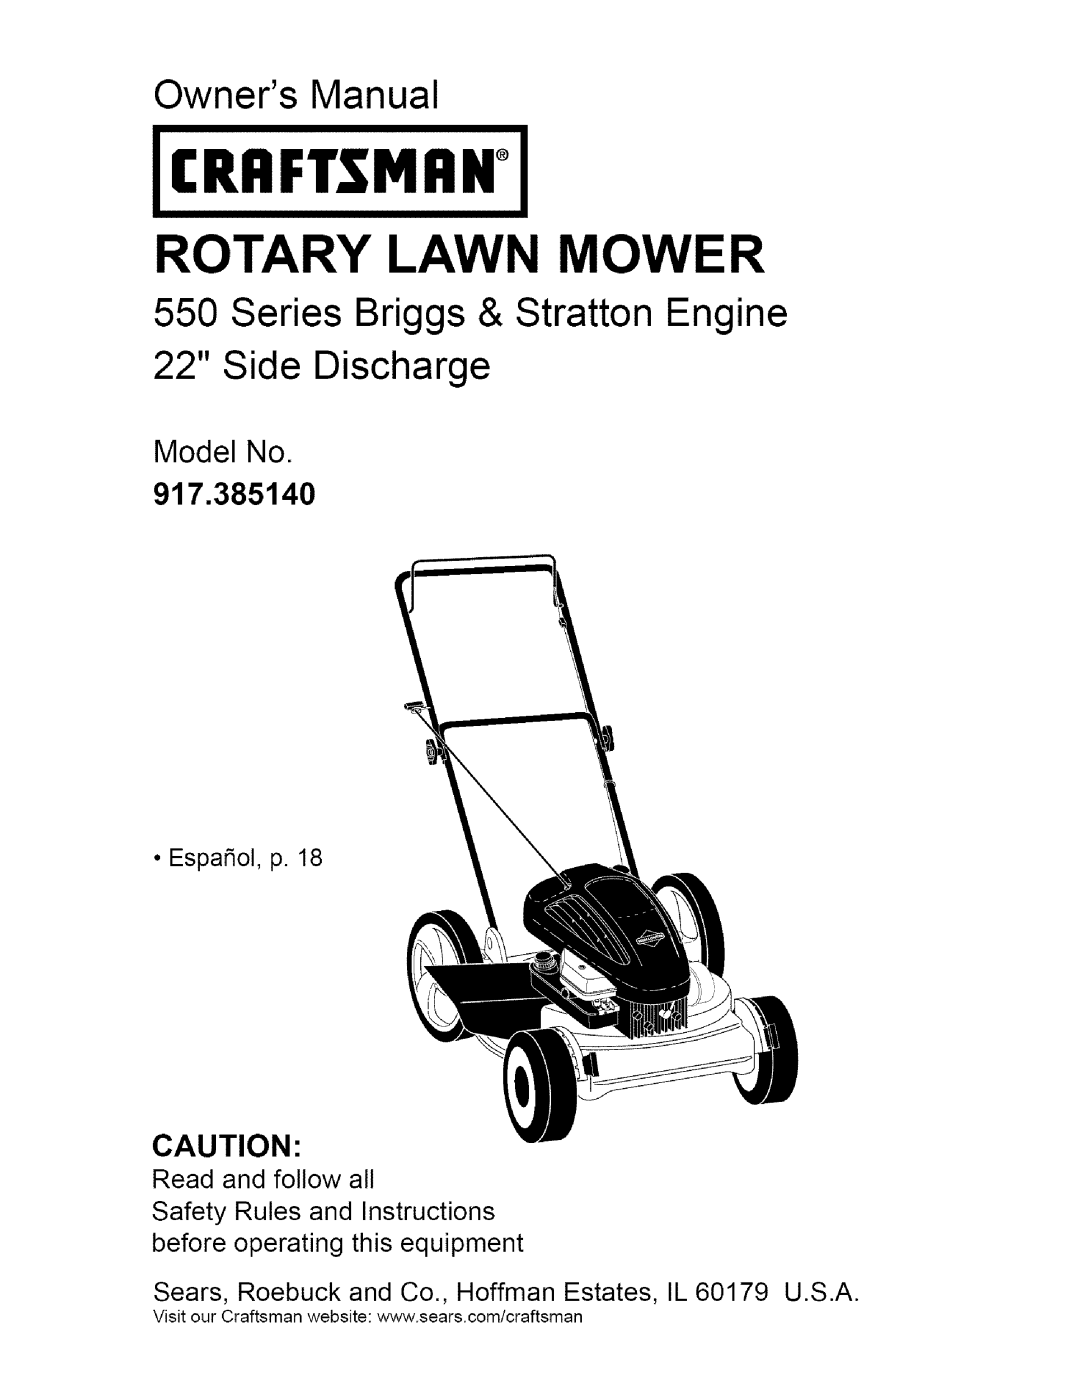 Craftsman 917.38514 owner manual Series Briggs & Stratton Engine, Model No, Crrftsmrn, Rotary Lawn Mower, Side Discharge 